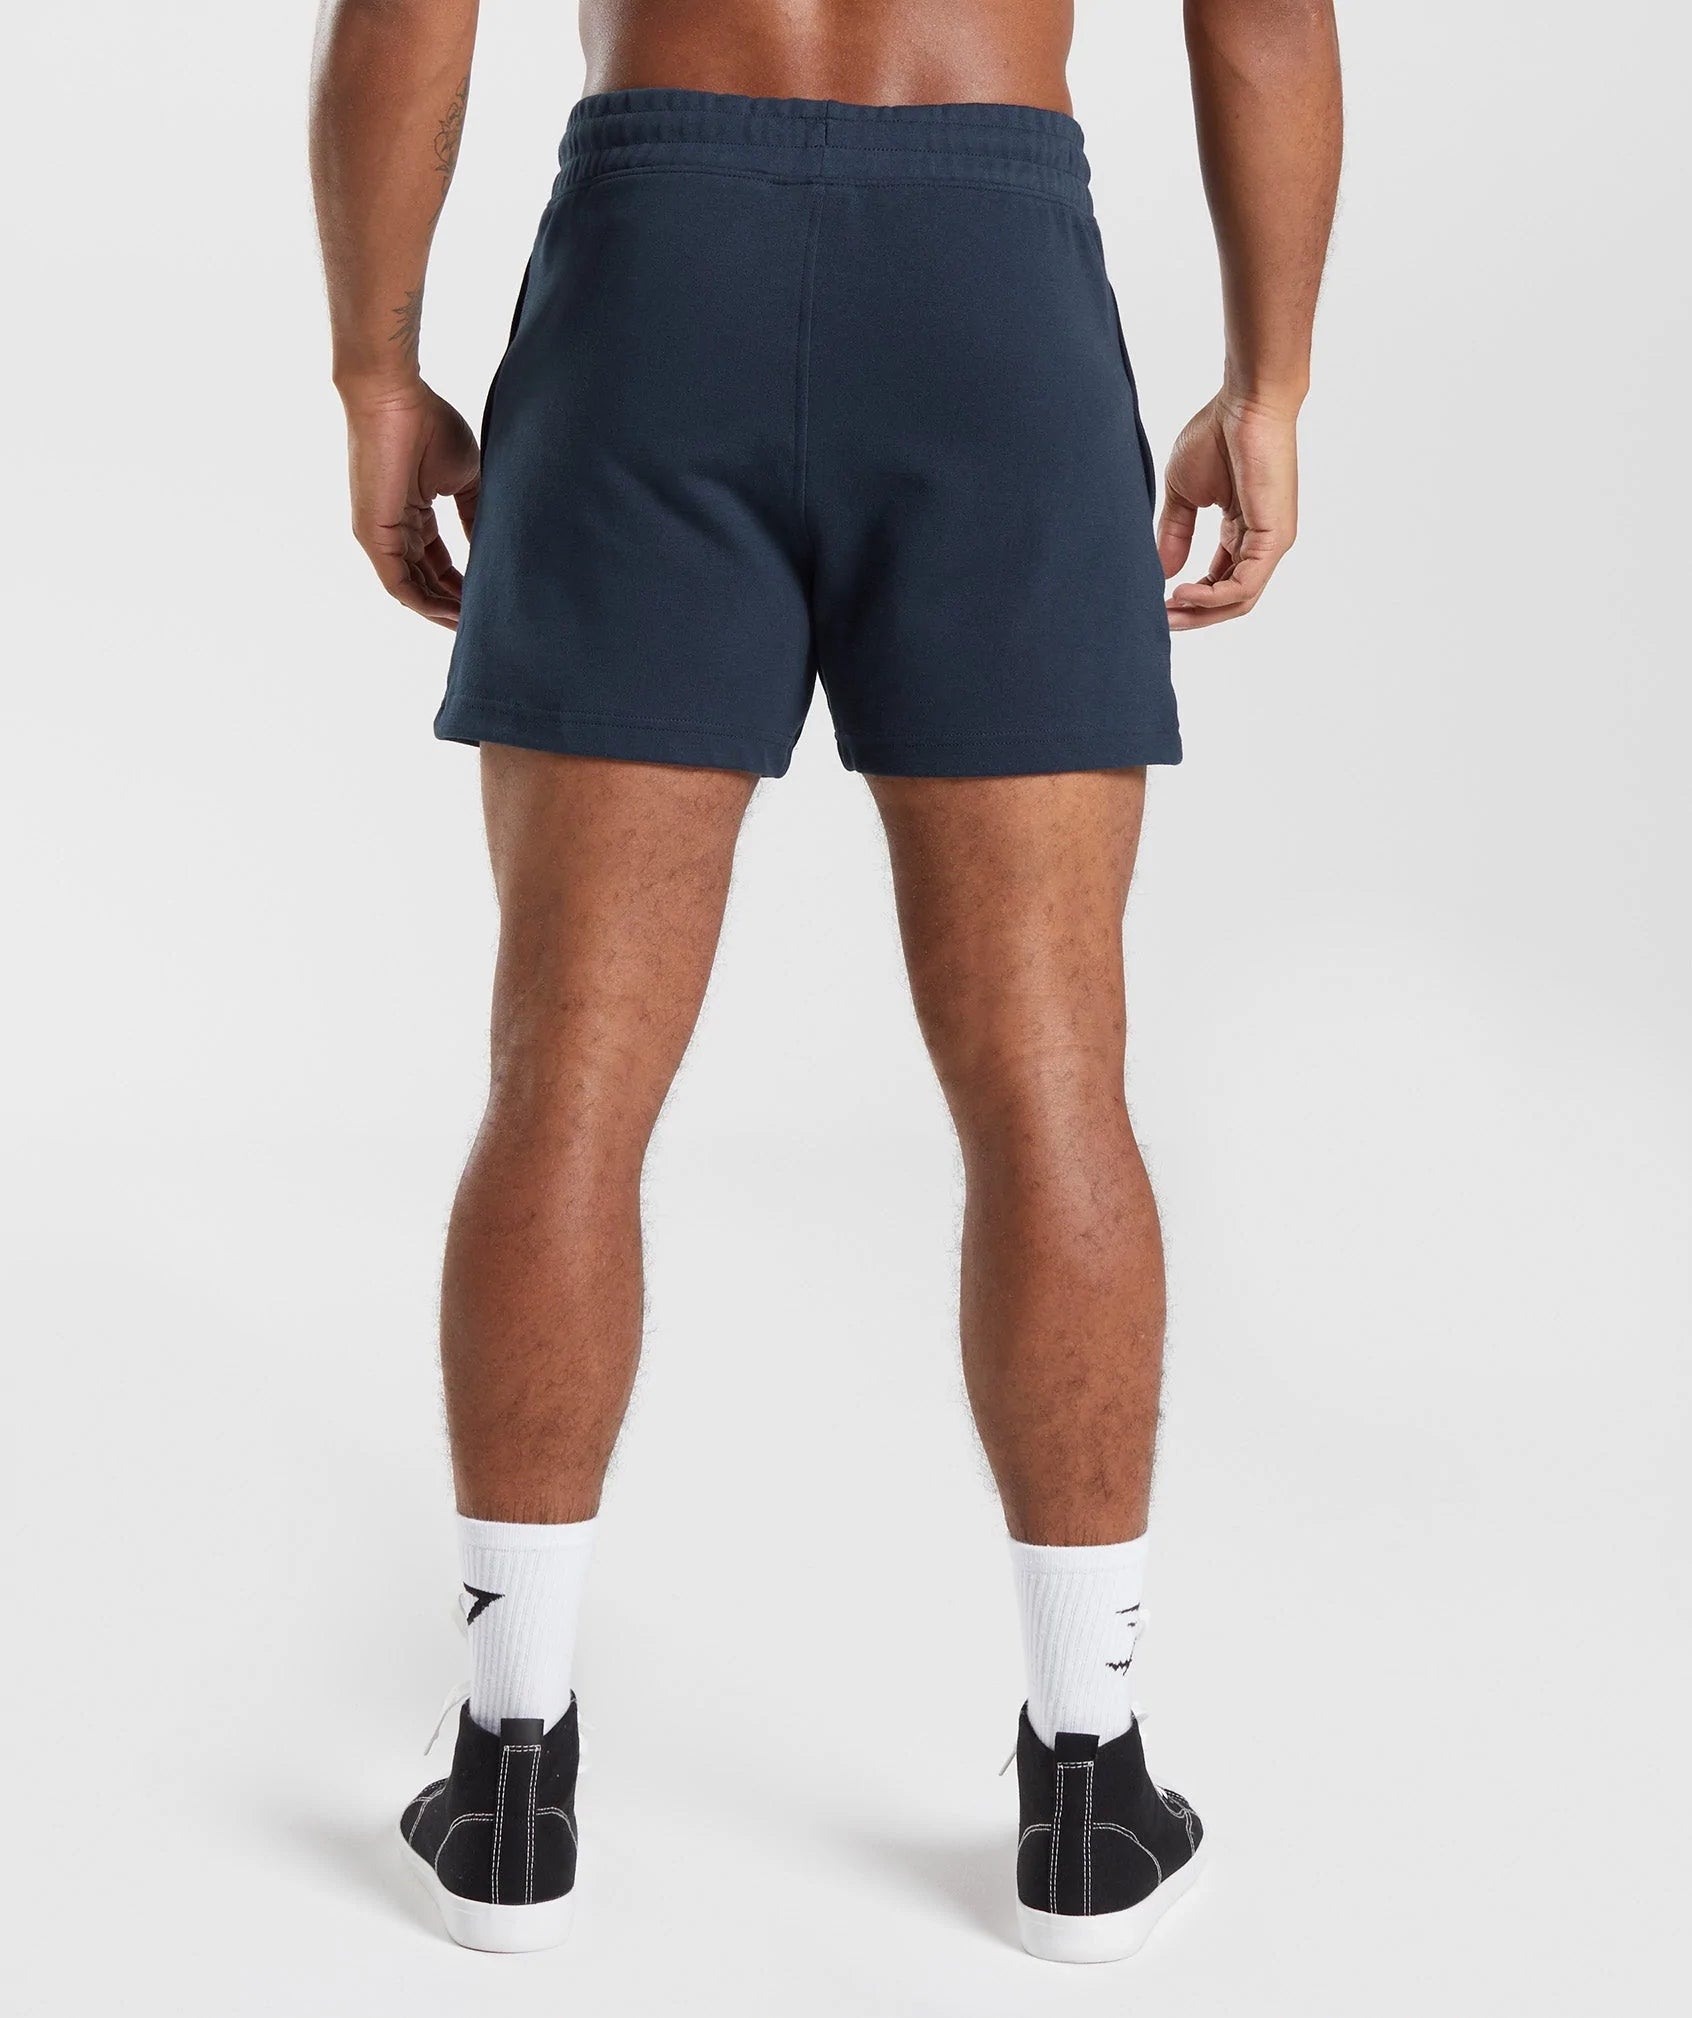 React 5" Shorts in Navy